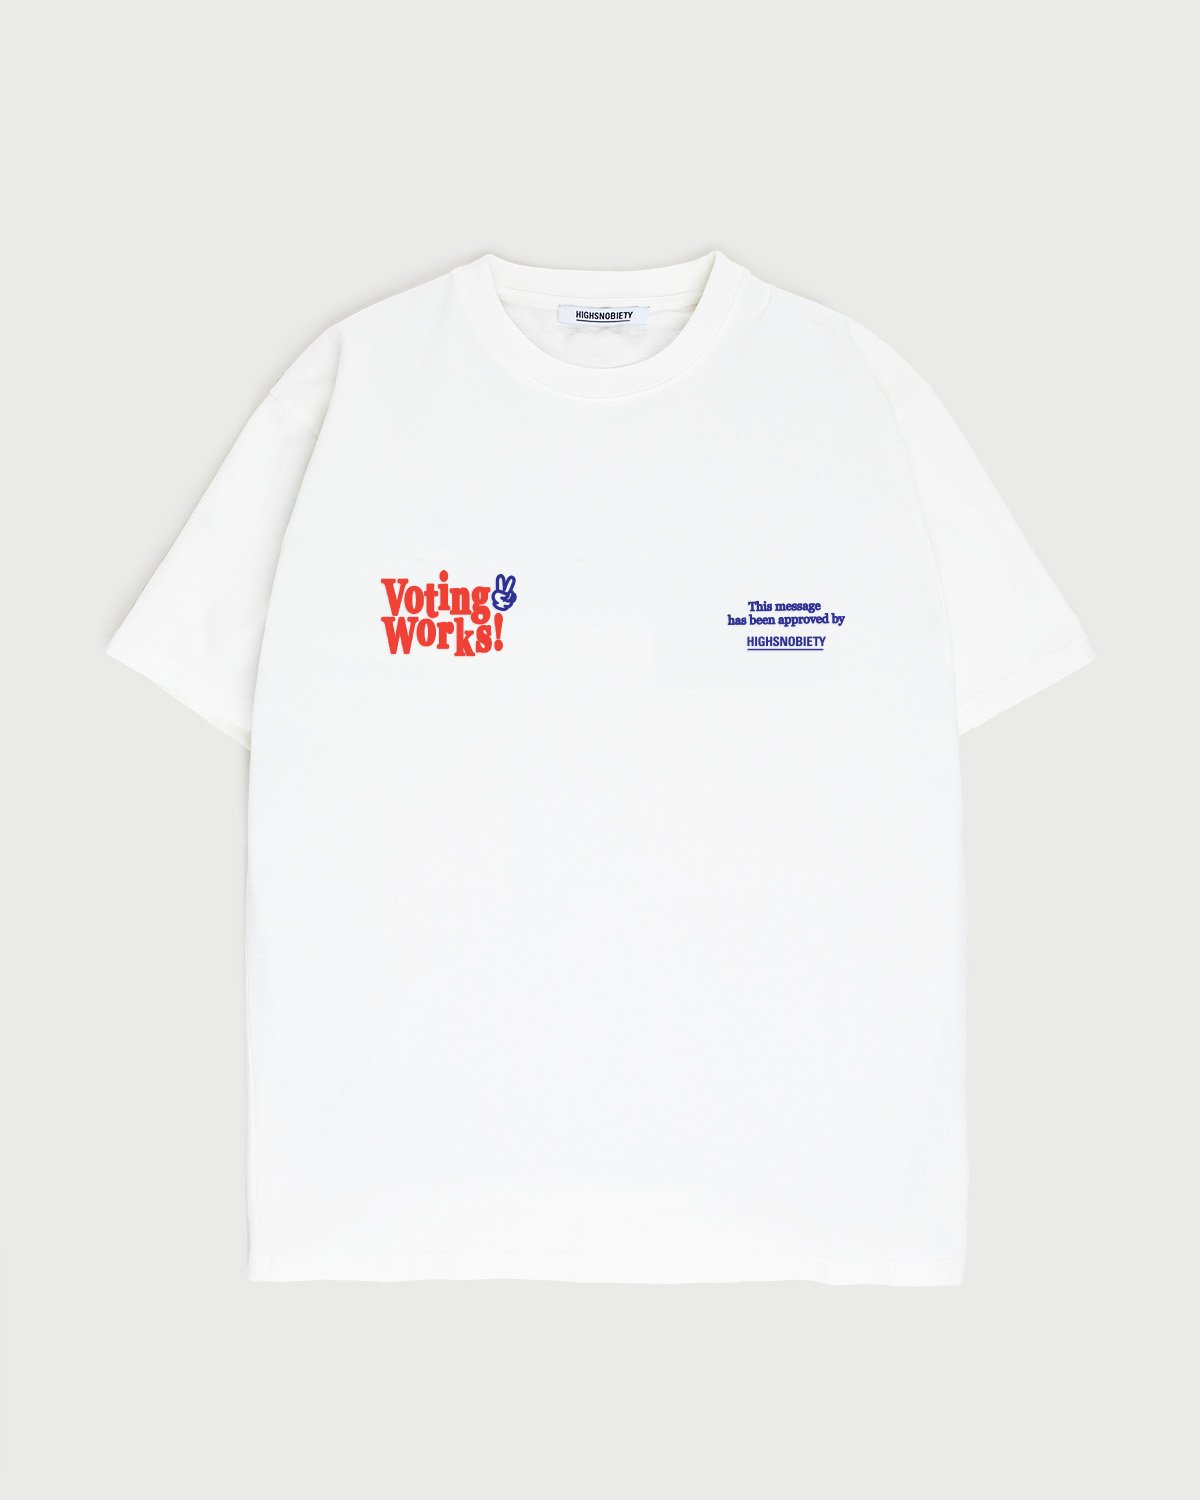 Highsnobiety - Voting Works 2020 T-Shirt White - Clothing - White - Image 2